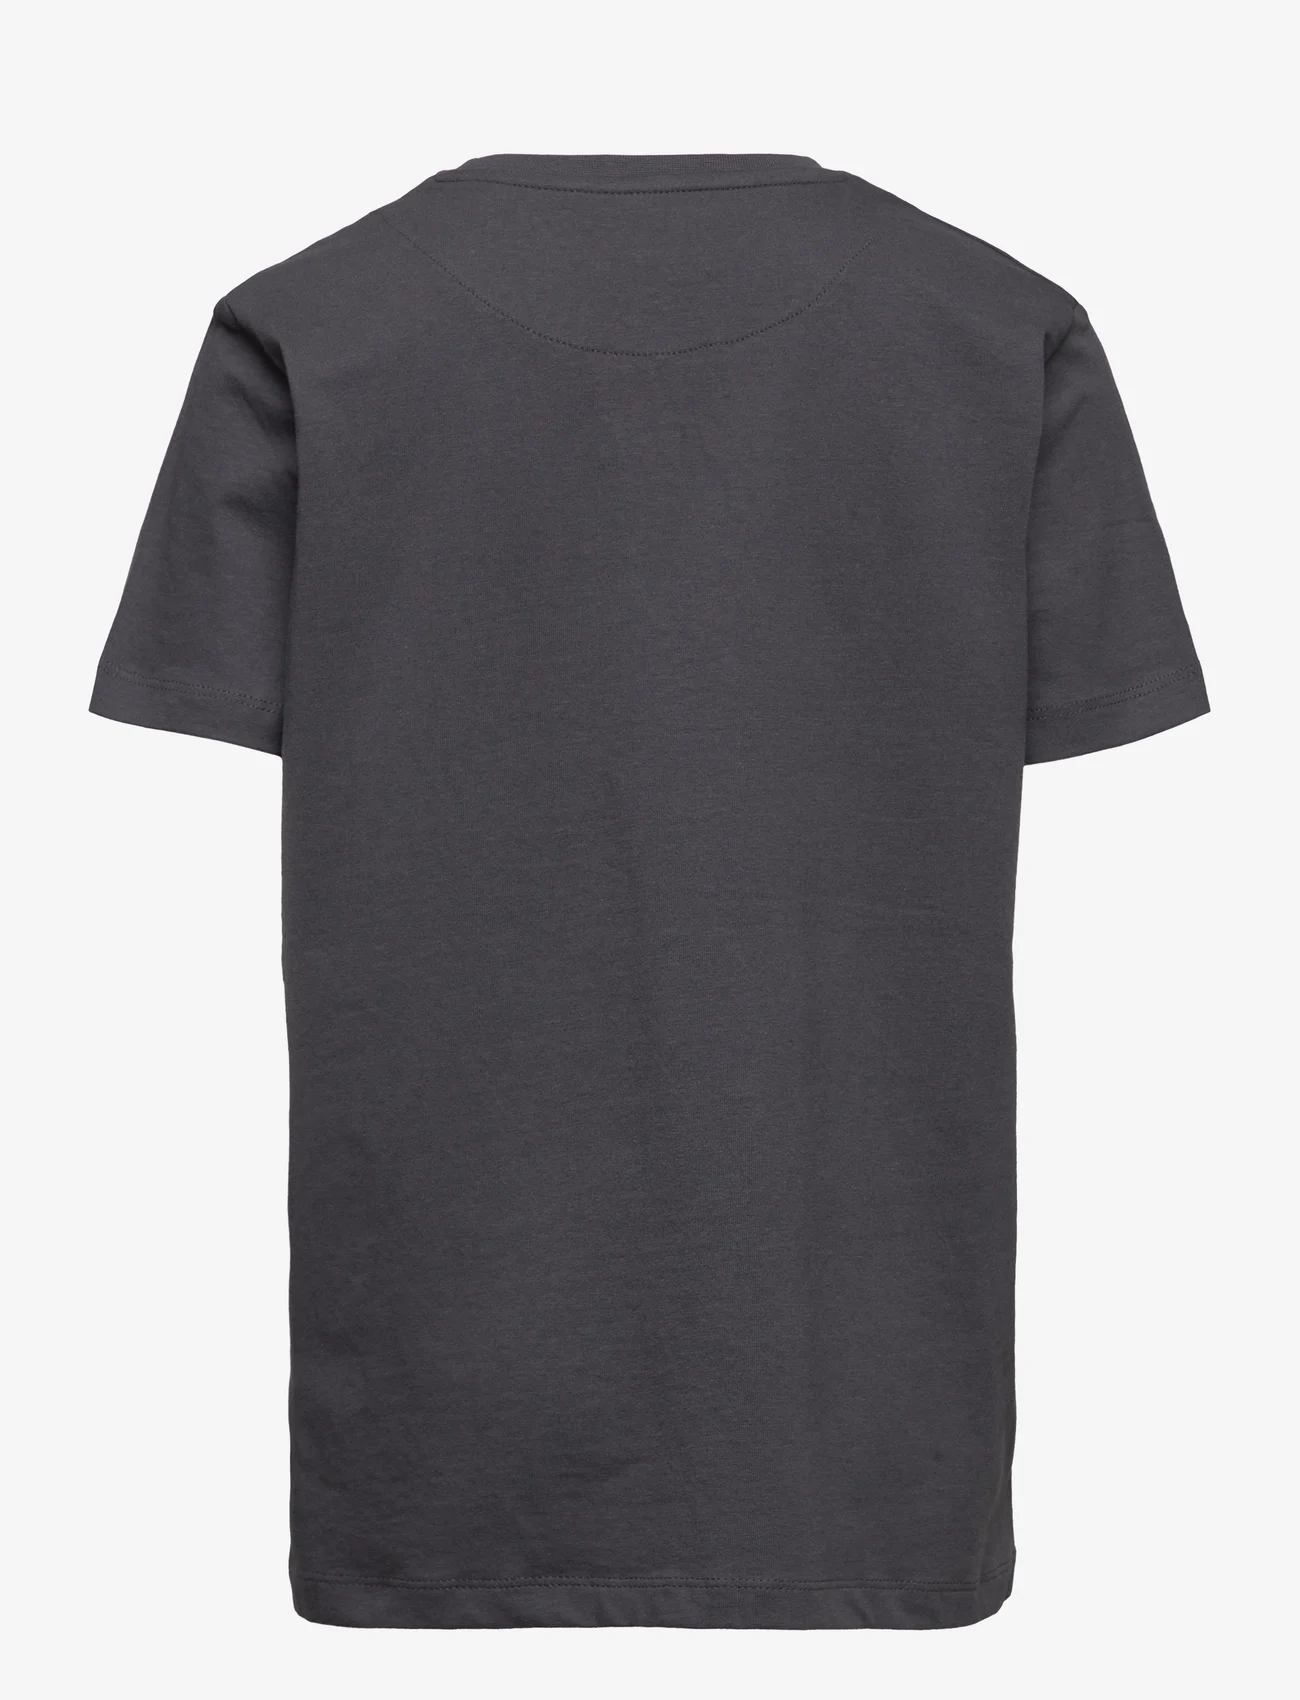 Lyle & Scott Junior - Classic T-Shirt - kortärmade t-shirts - ebony - 1